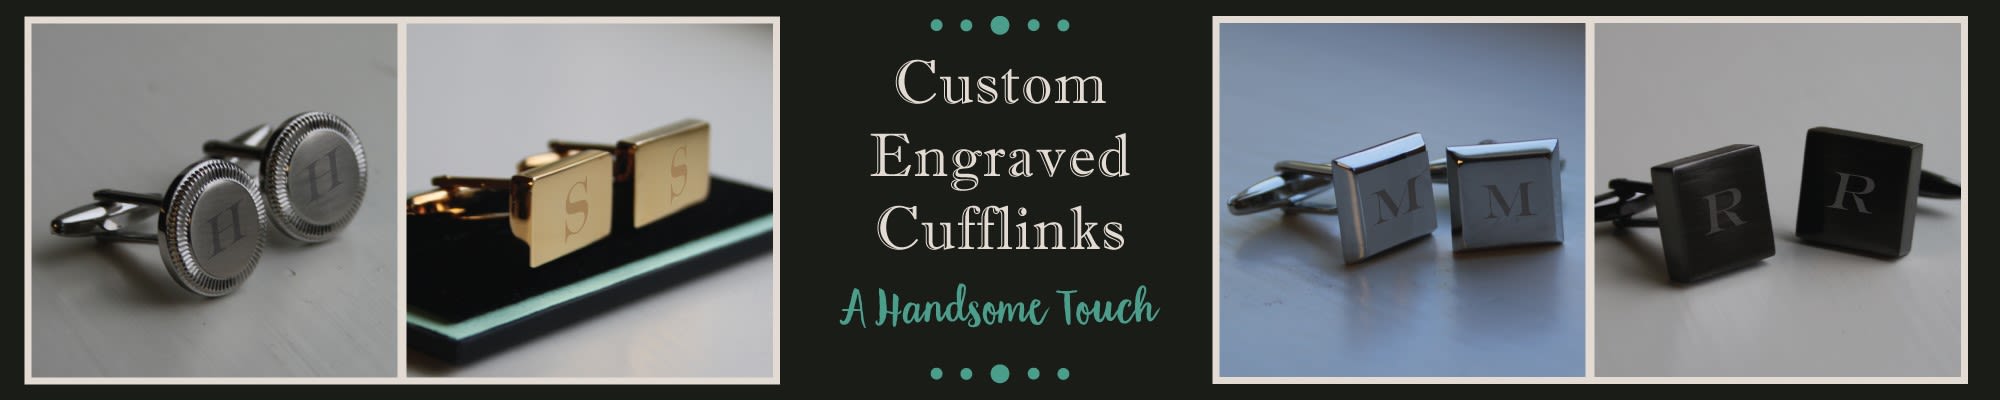 Custom Engraved Cufflinks 